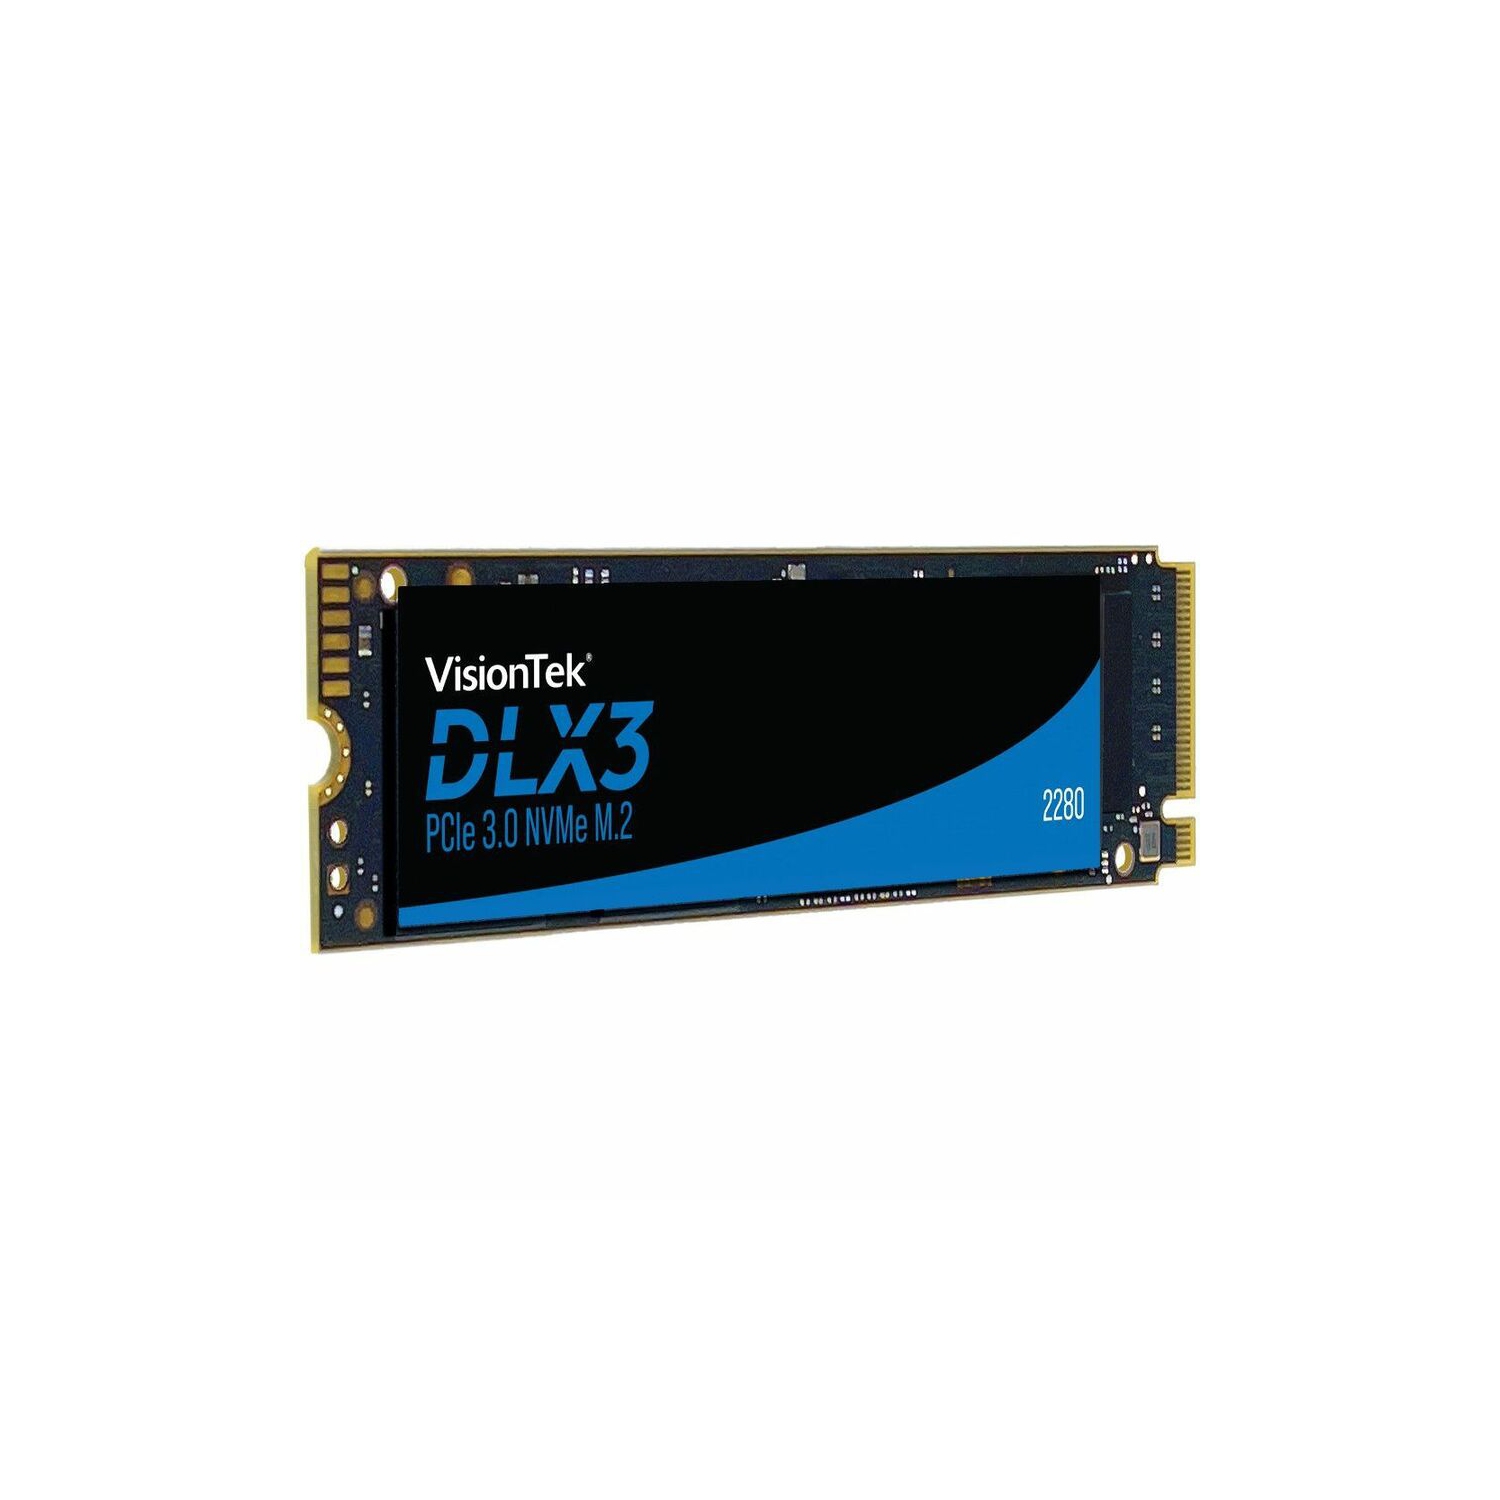 VisionTek DLX3 2280 M.2 PCIe 3.0 x4 SSD (NVMe) 901557